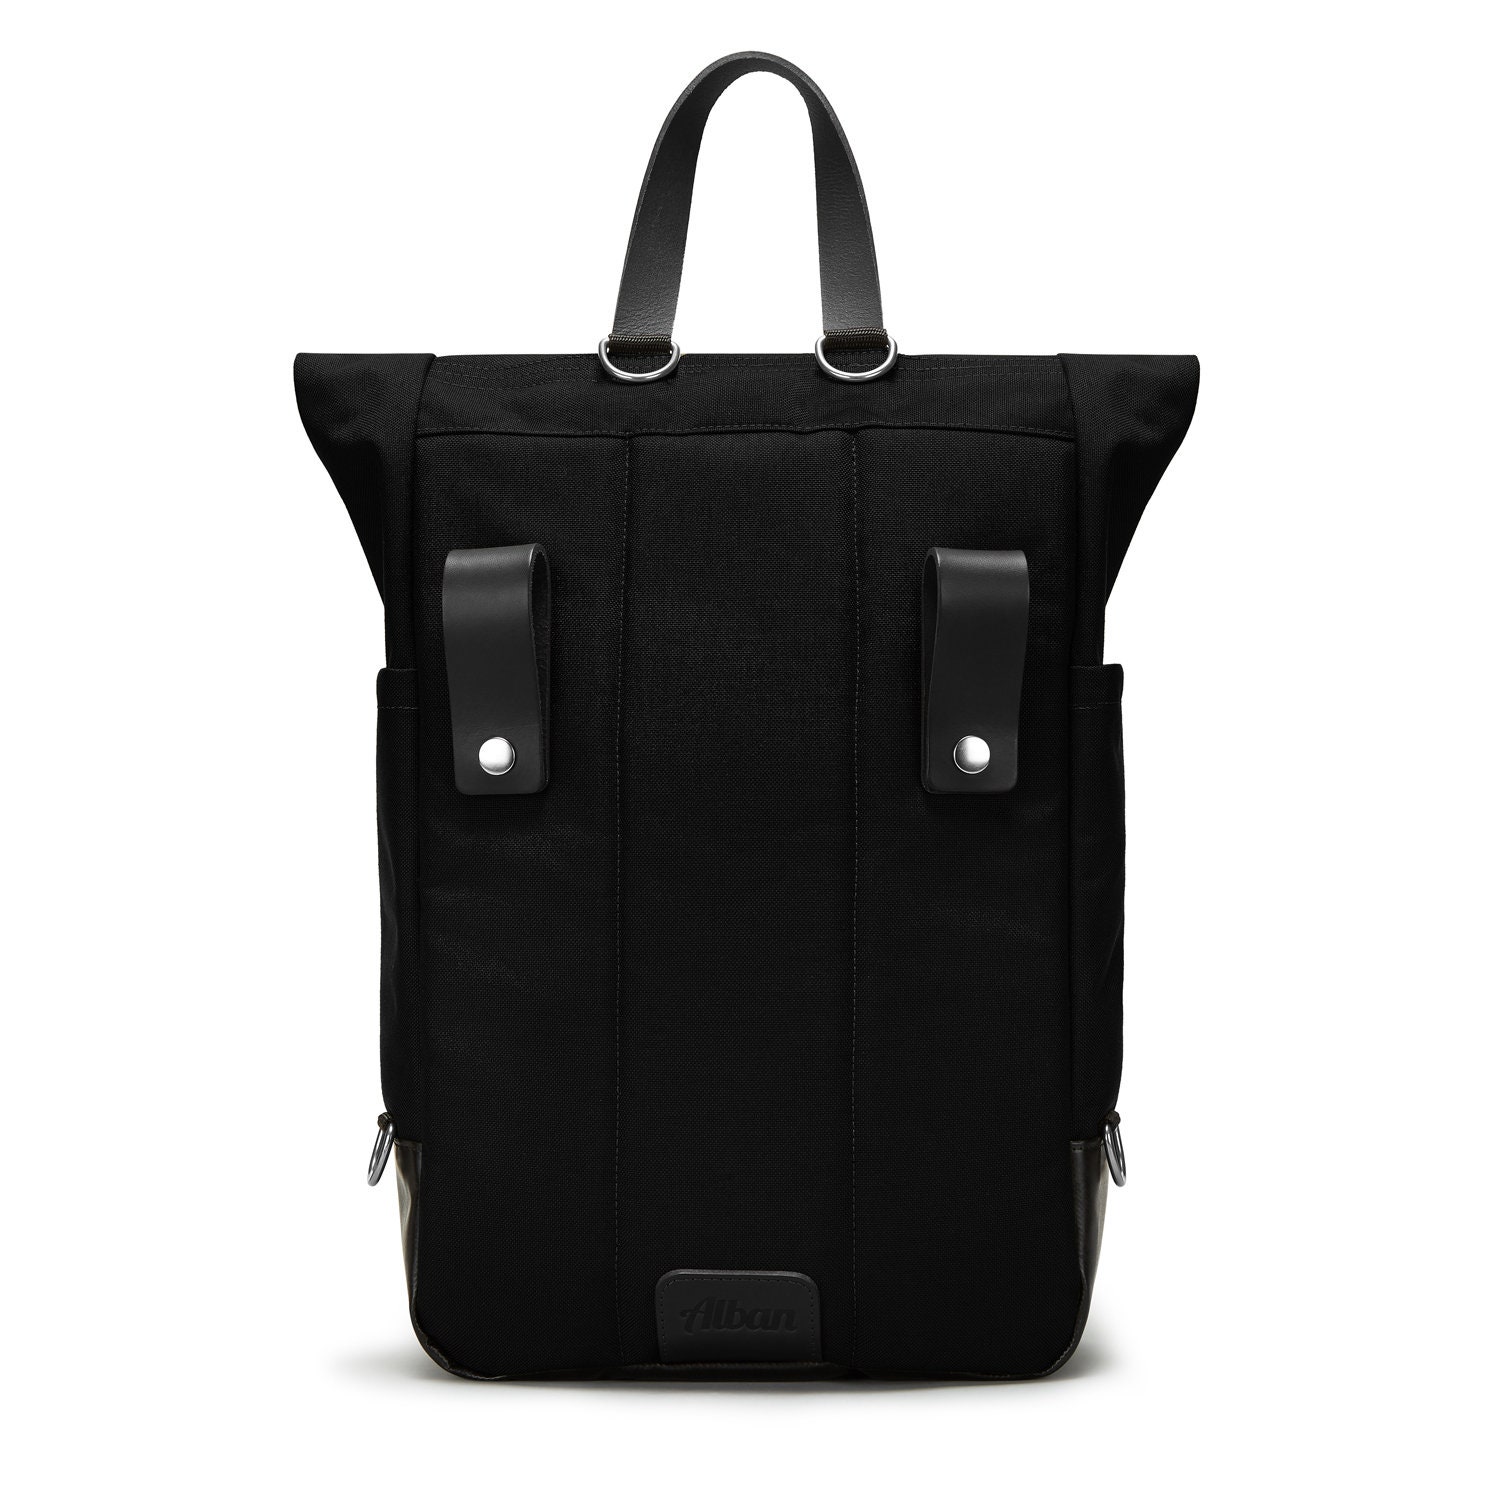 Bluelounge Messenger Bag Fits Up To 16 Laptop - Grey 